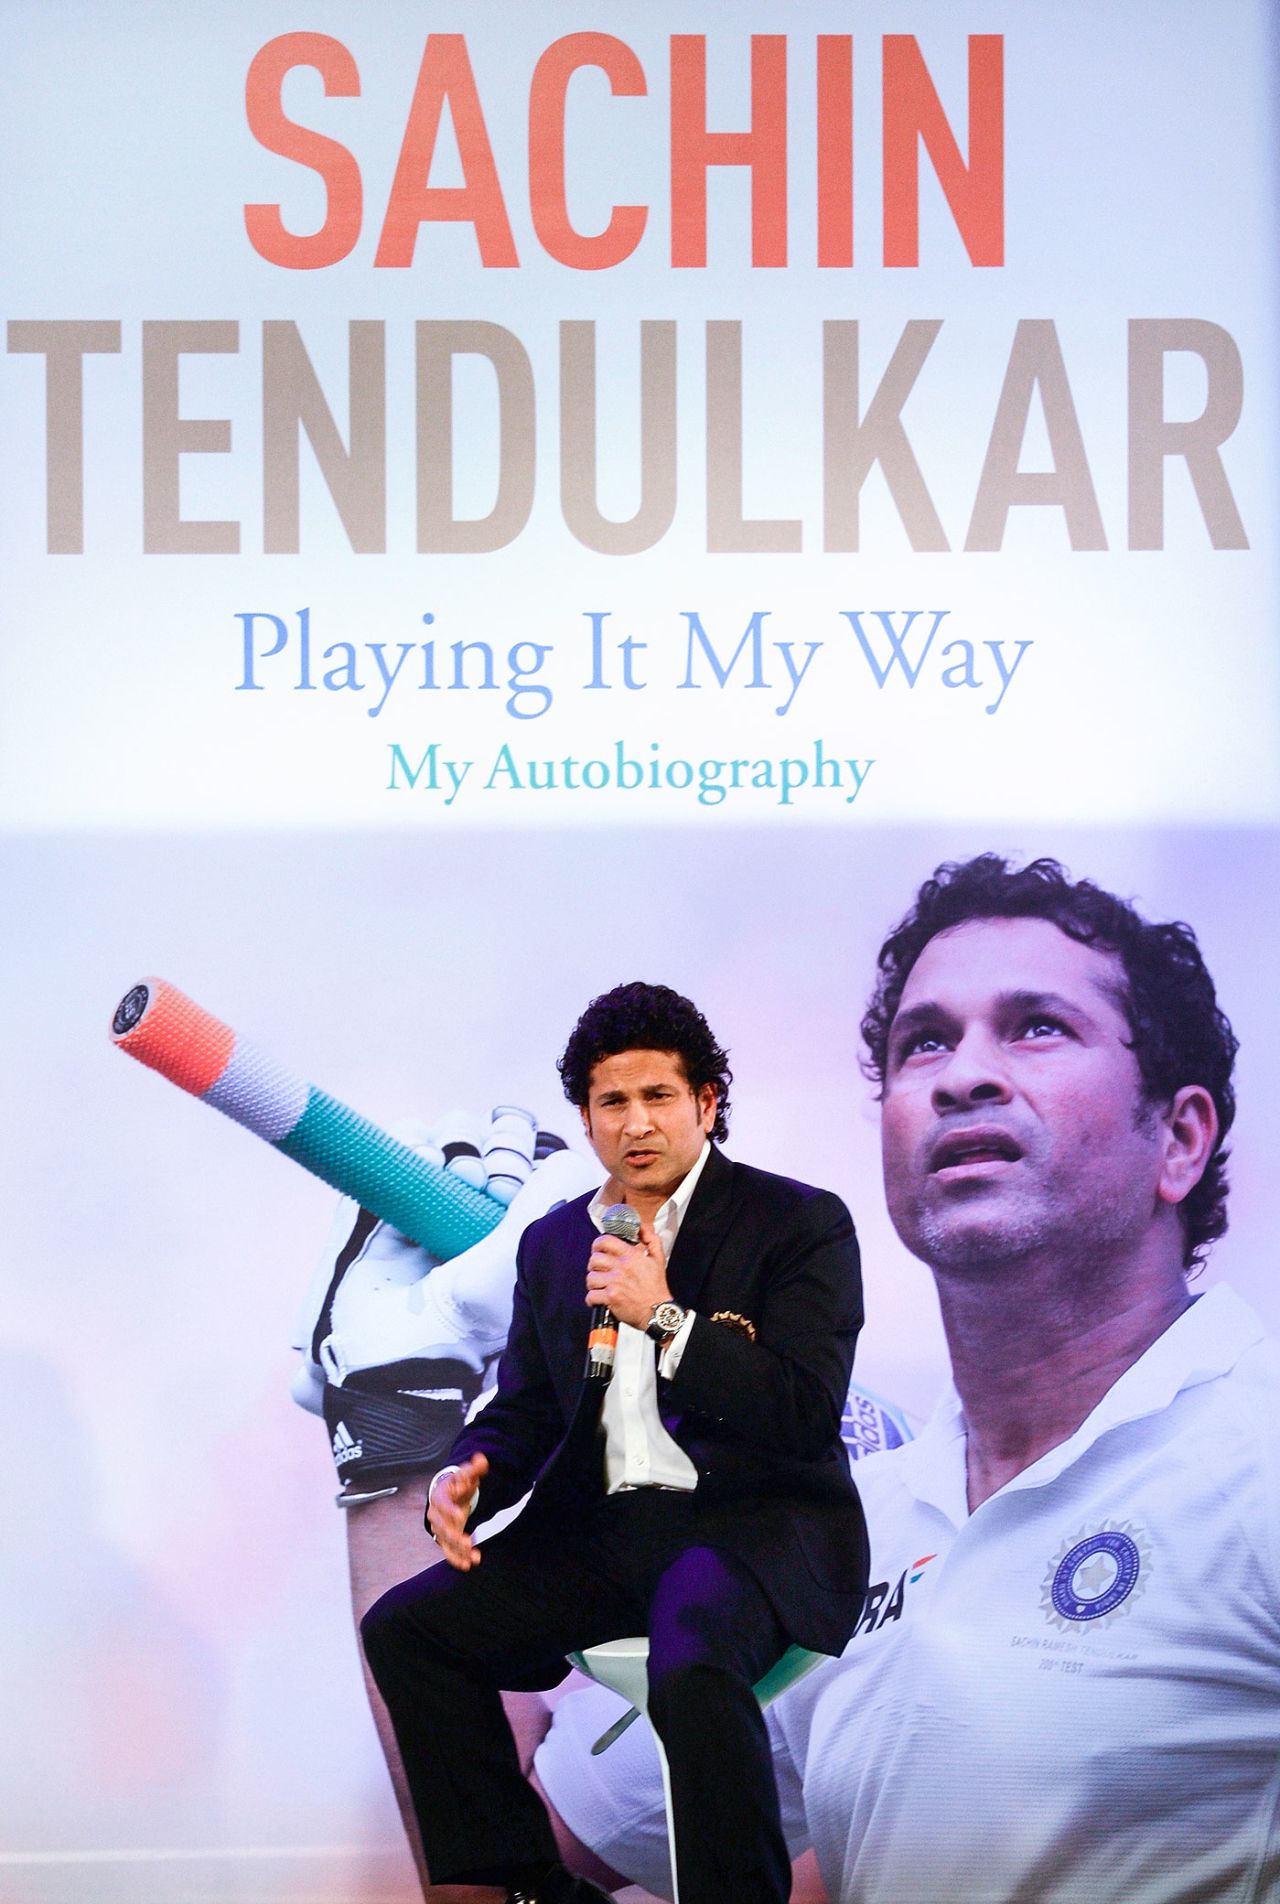 Sachin Tendulkar speaks at the launch of his autobiography, Mumbai, November 5, 2014